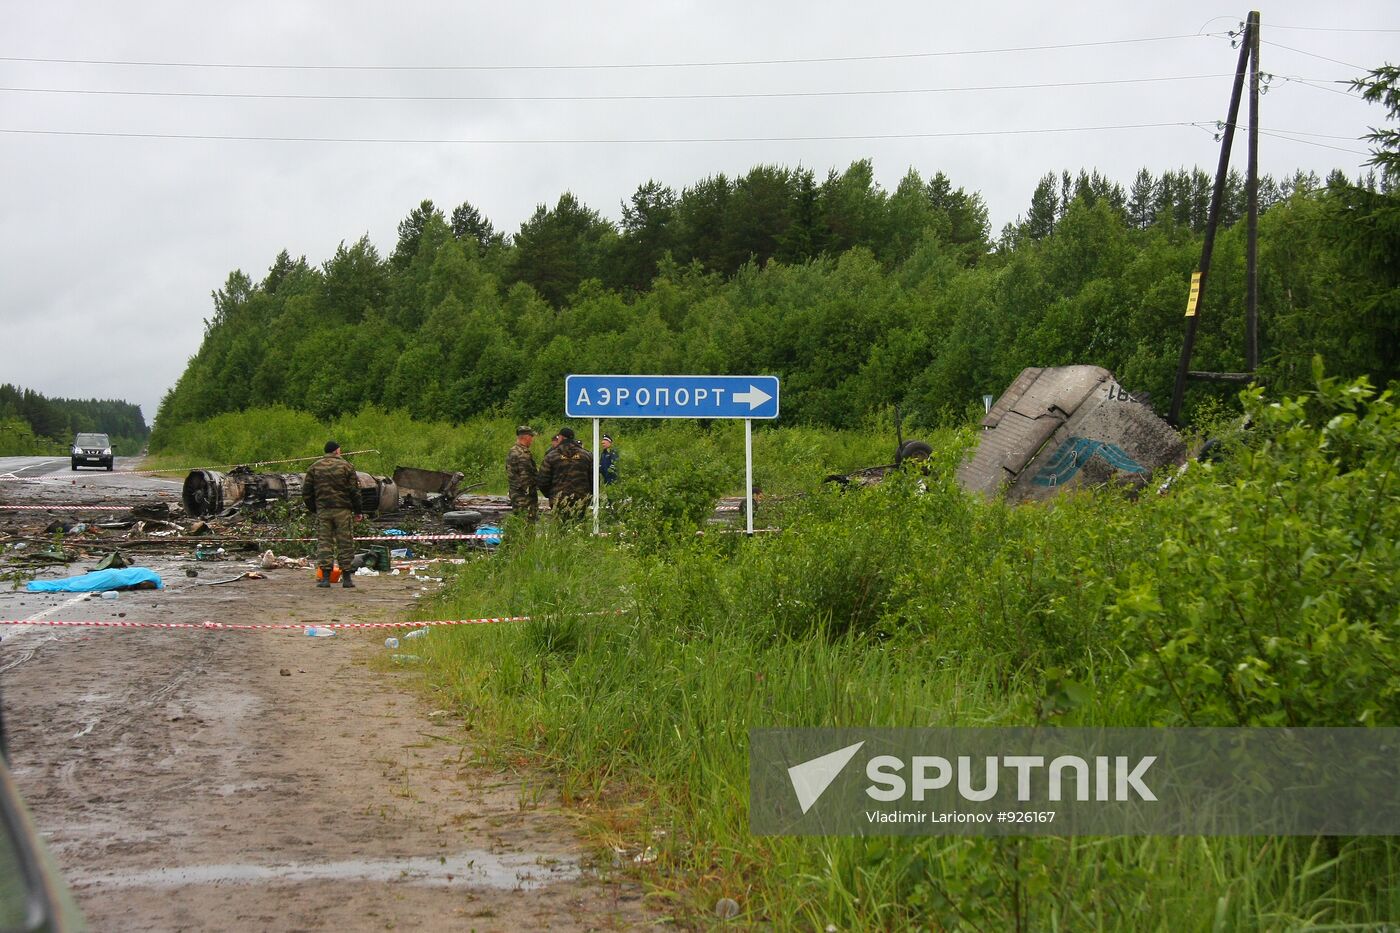 TU-134 passenger plane crashes in Karelia